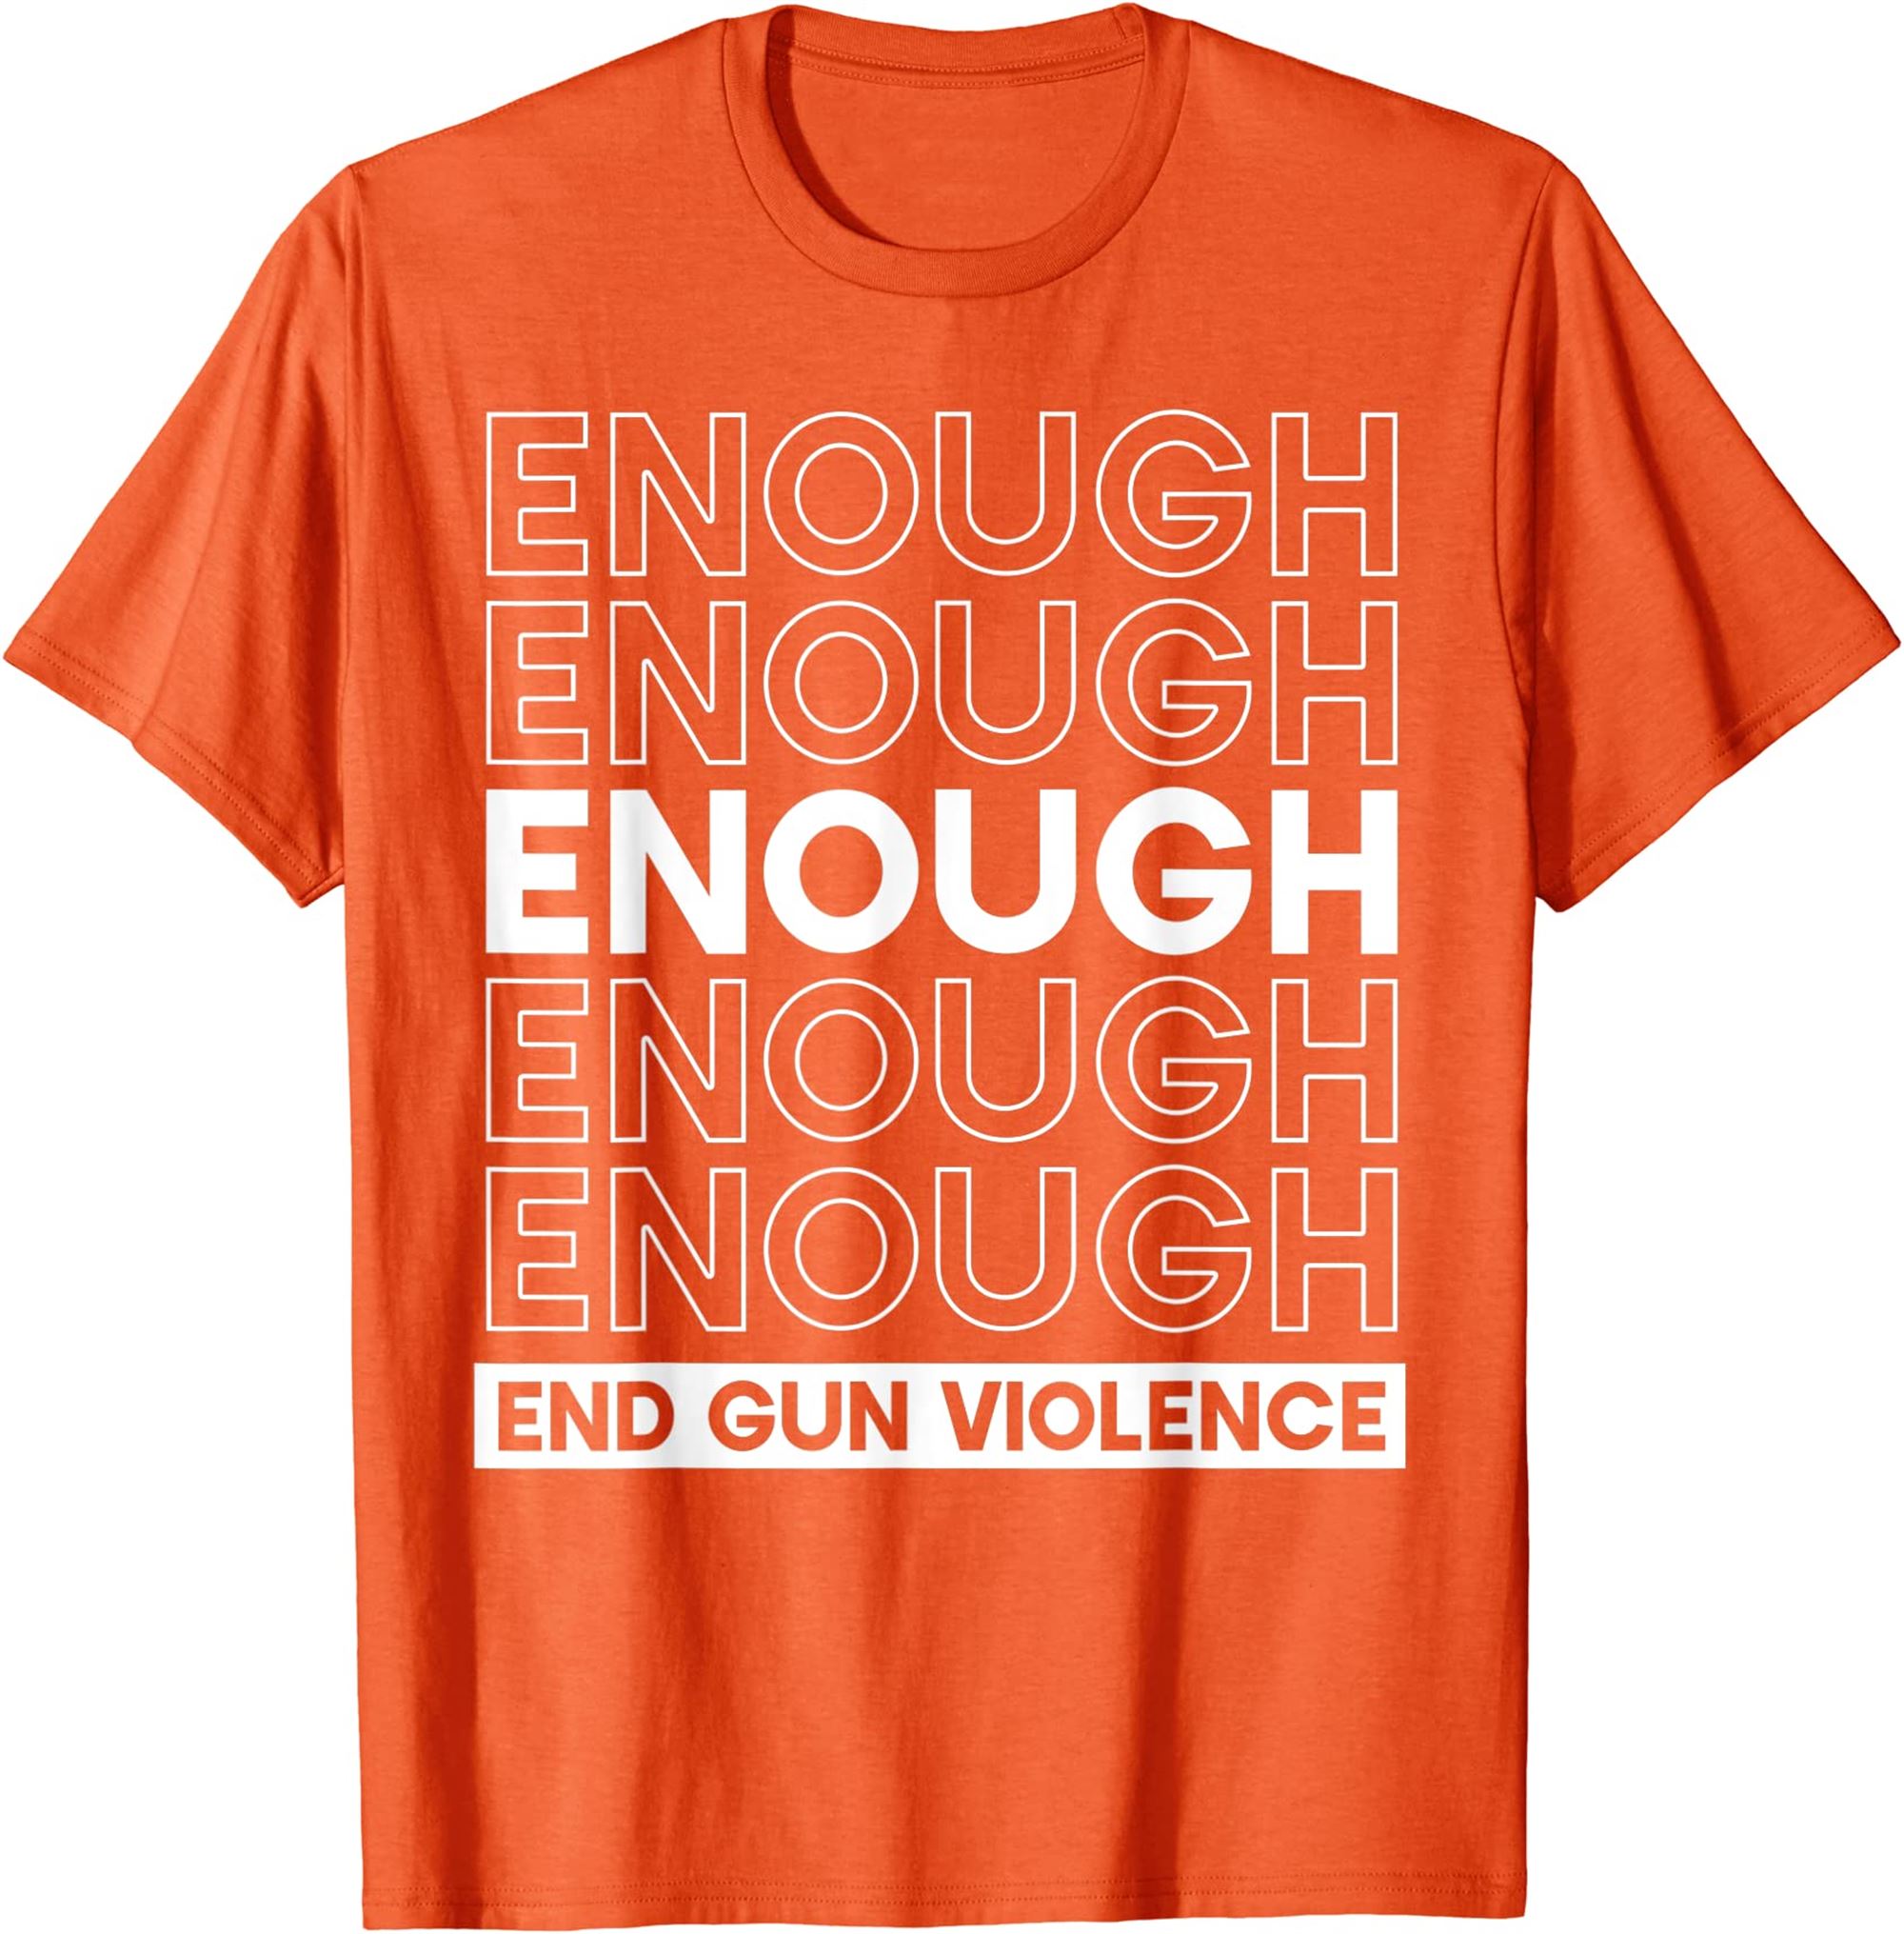 No More Silence End Gun Violence Enough Wear Orange Day Tee T-shirt Plus Size Up To 5xl